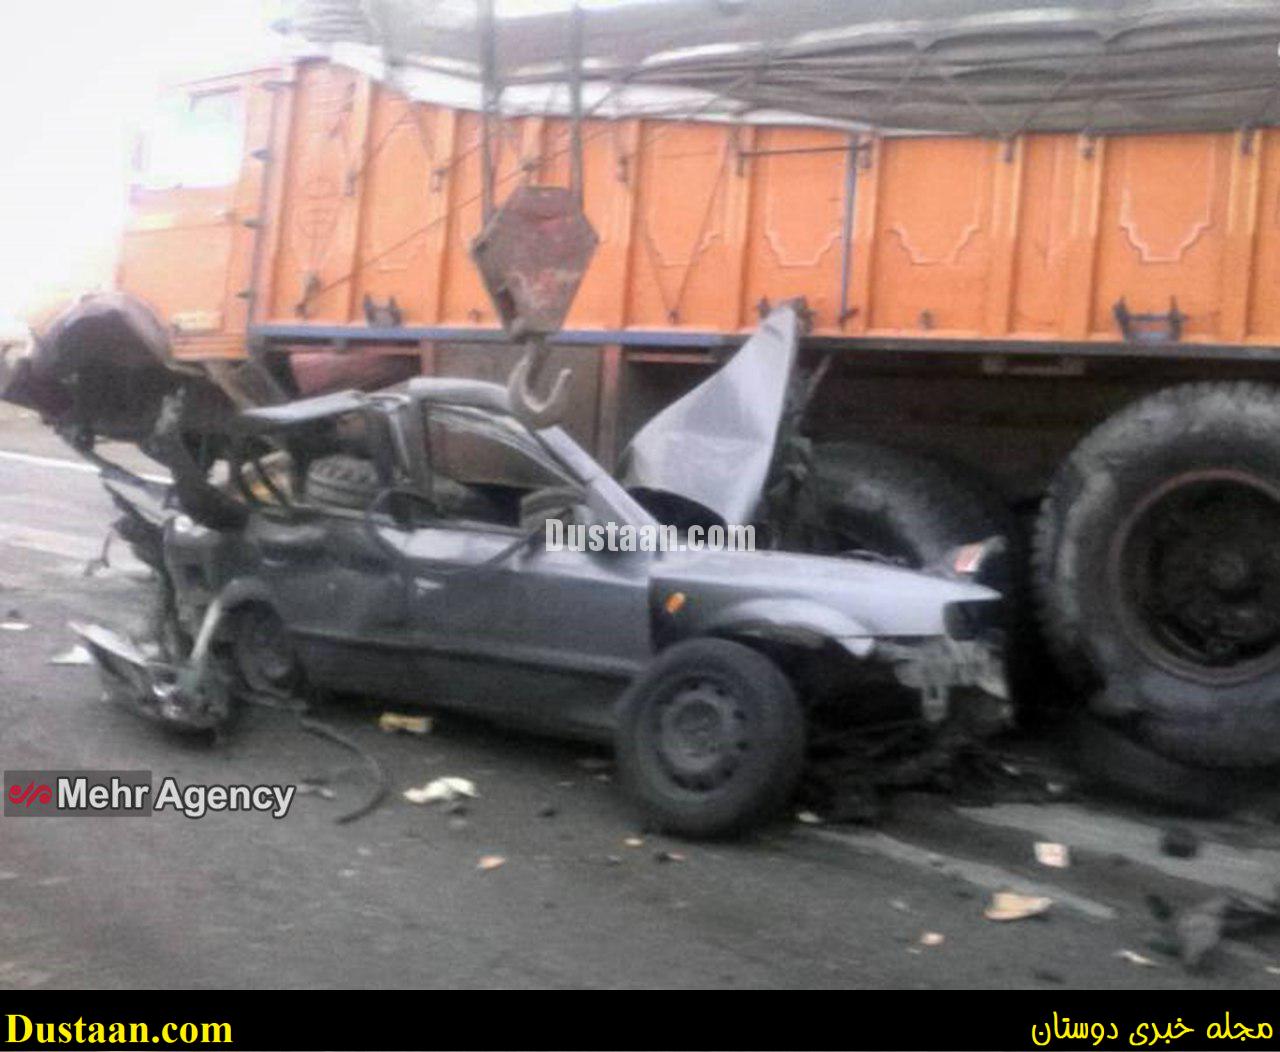 www.dustaan.com-dustaan.com-برخورد مرگبار کامیون و سمند